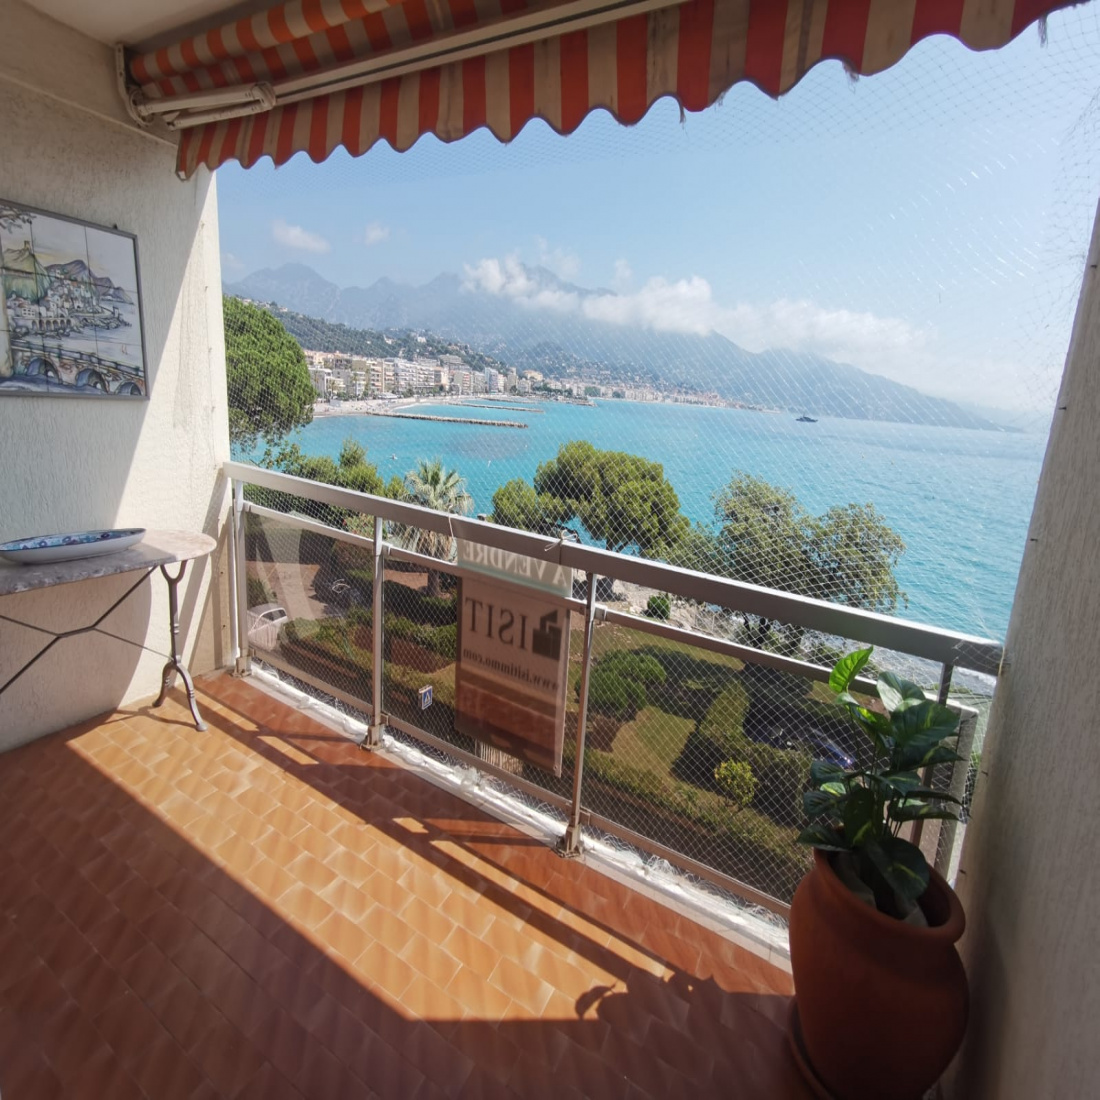 Vente Appartement 80m² 3 Pièces à Roquebrune-Cap-Martin (06190) - Isit Immo